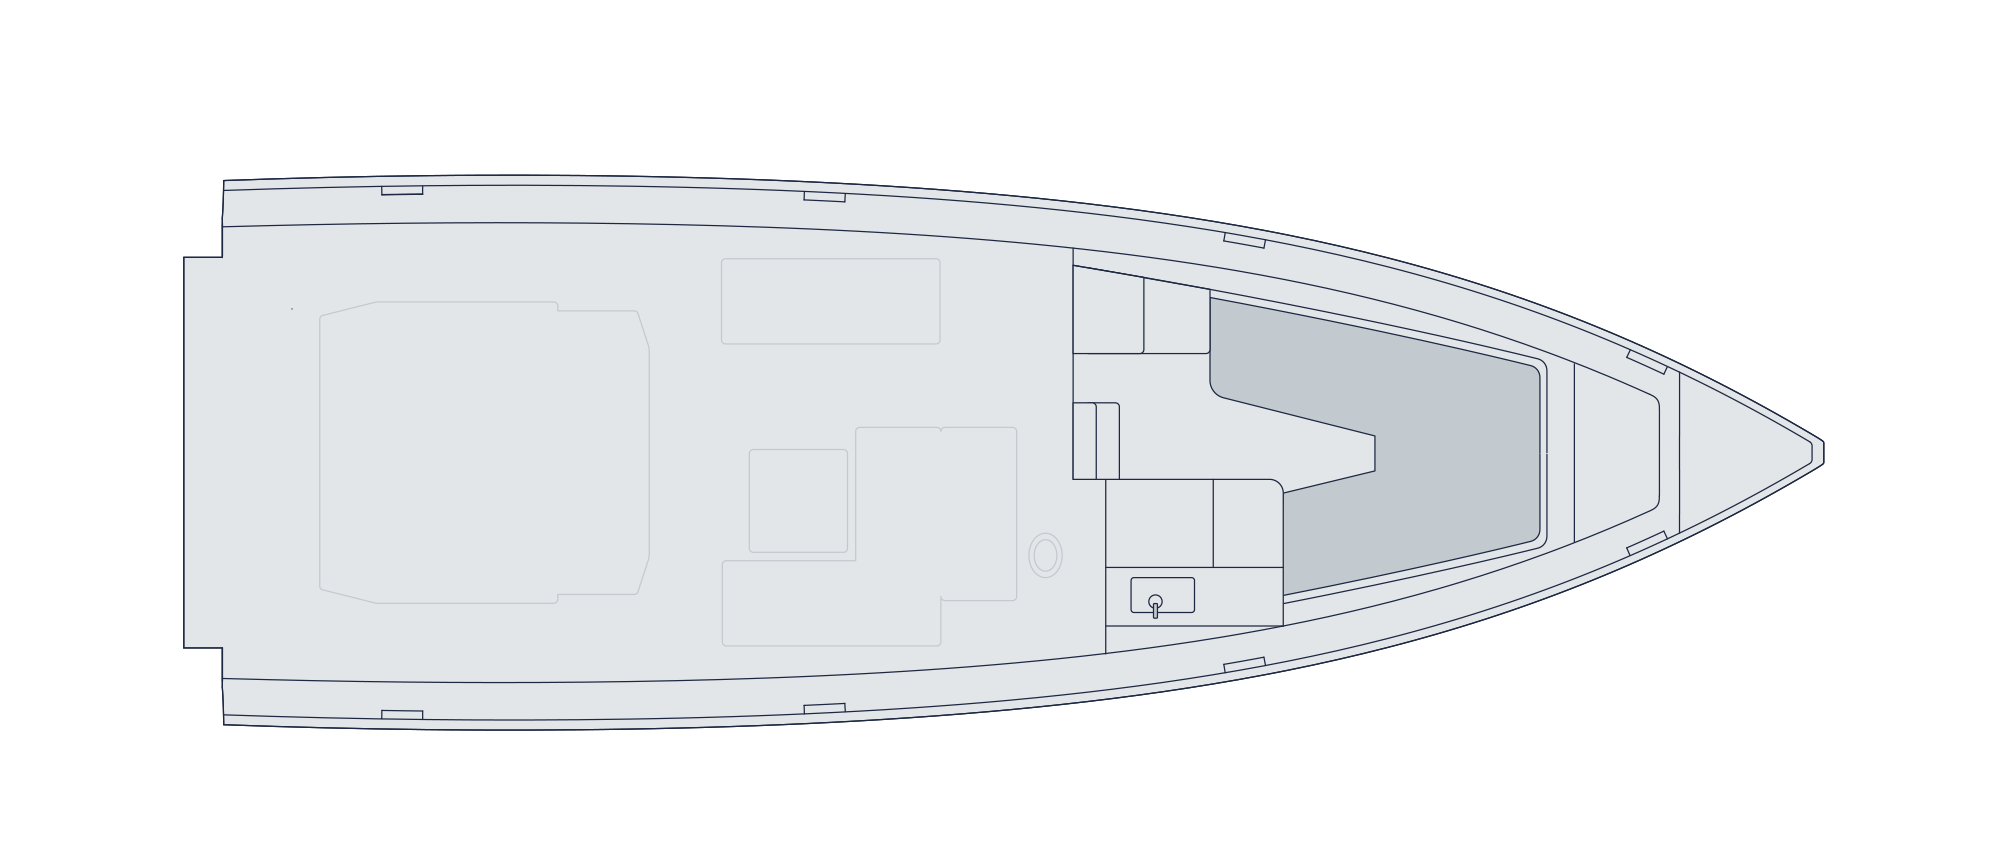 swan yacht concept